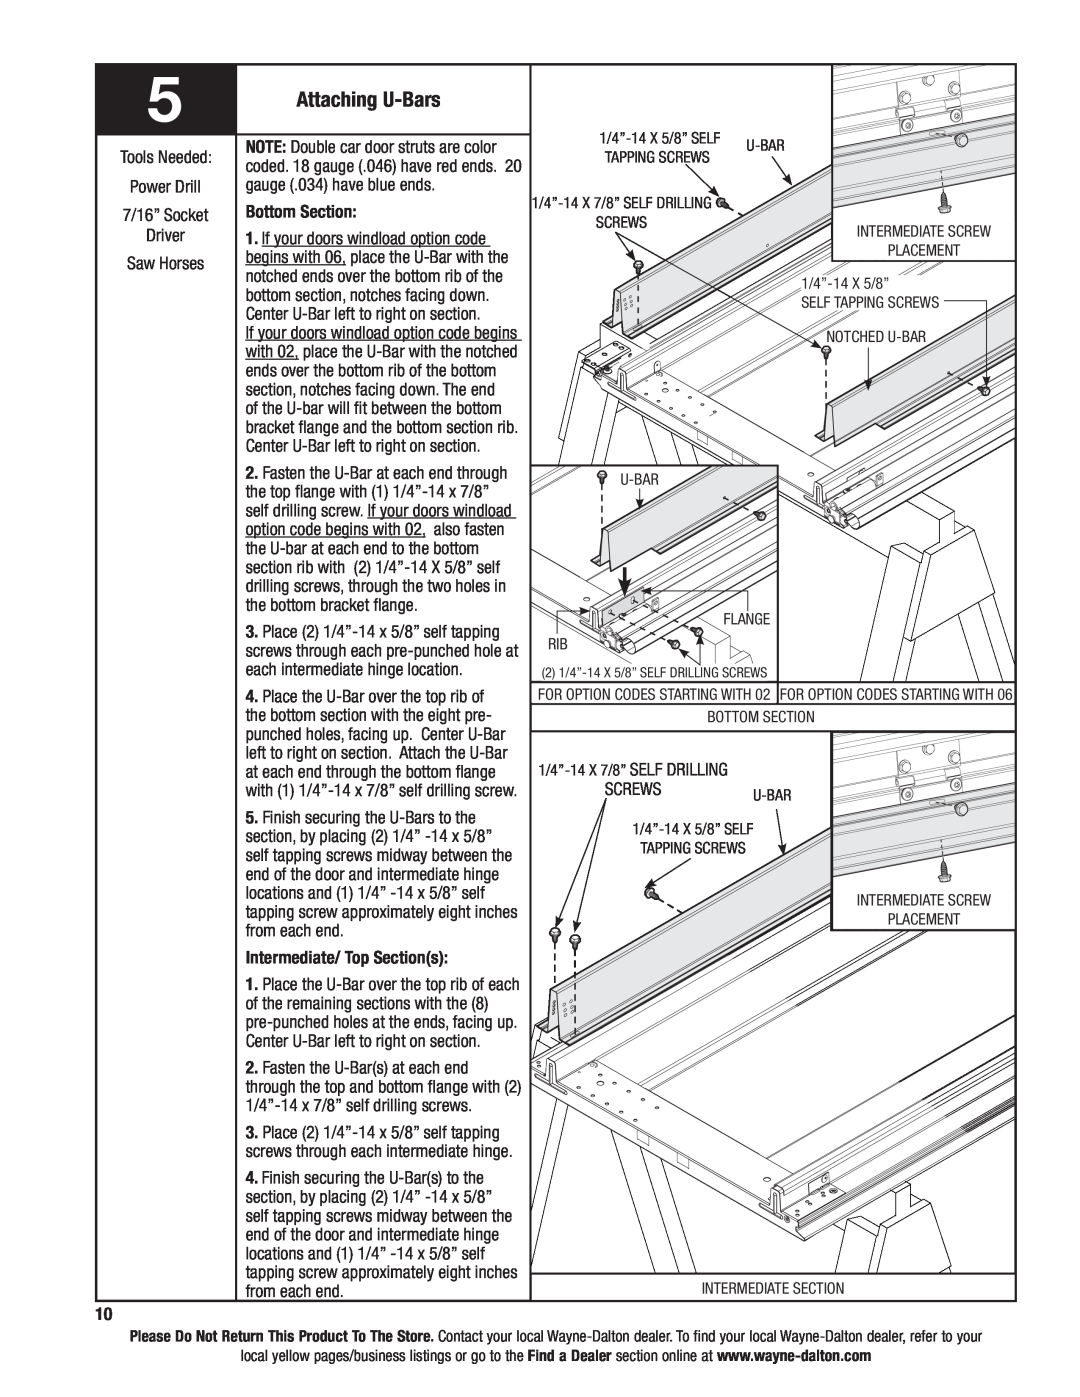 Wayne-Dalton 6100 installation instructions Attaching U-Bars 